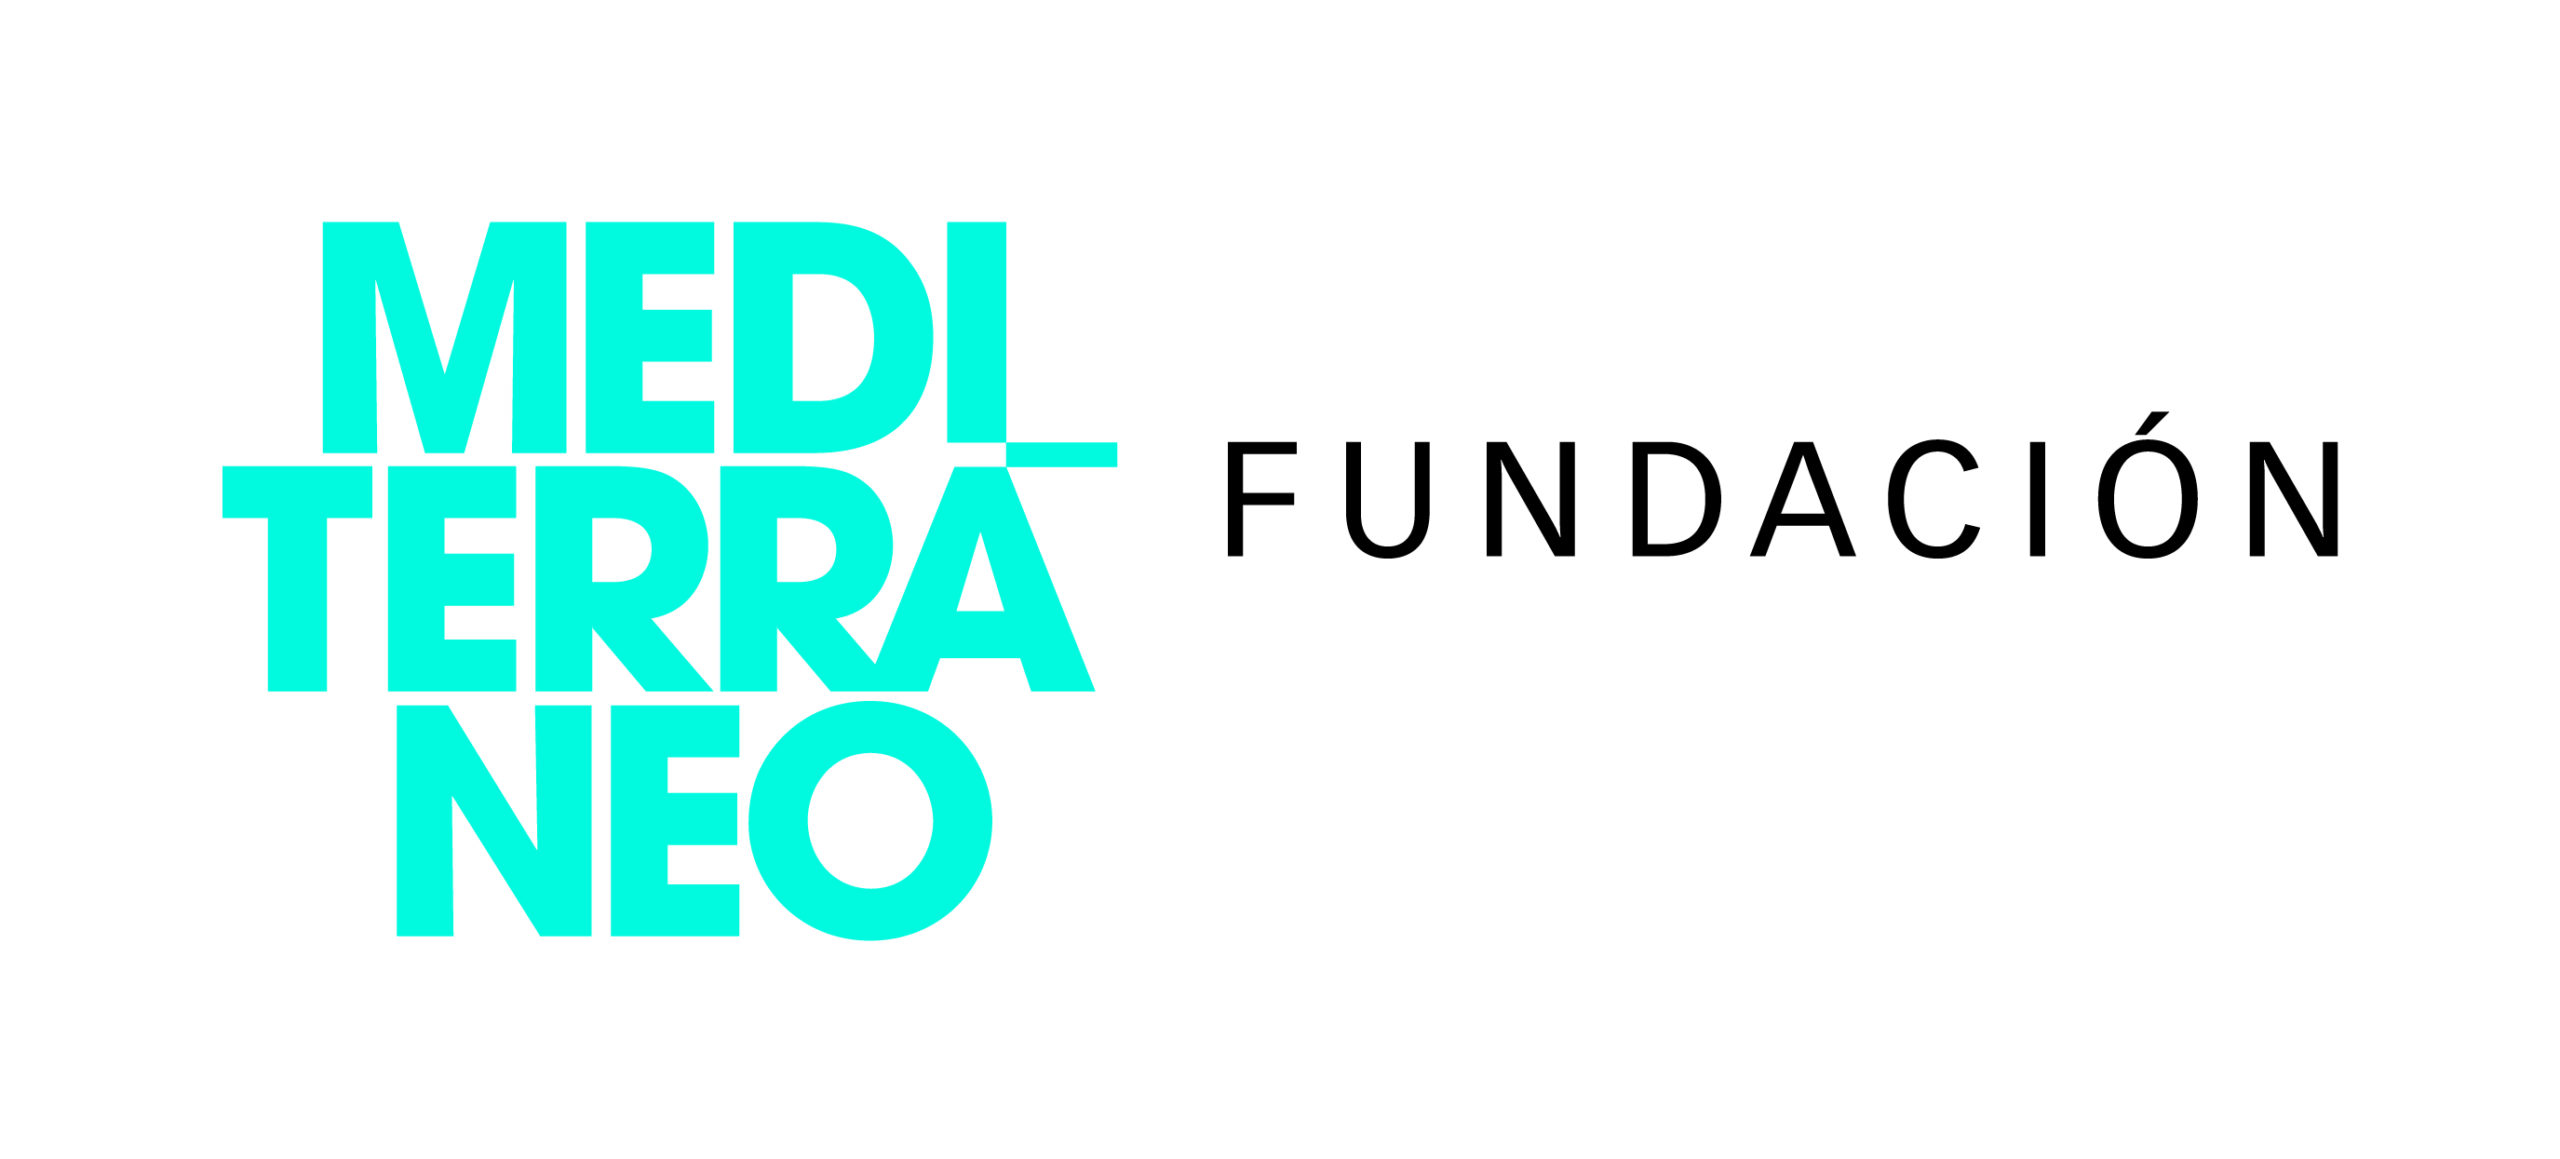 Fundación Caja Mediterráneo member of the CECA group